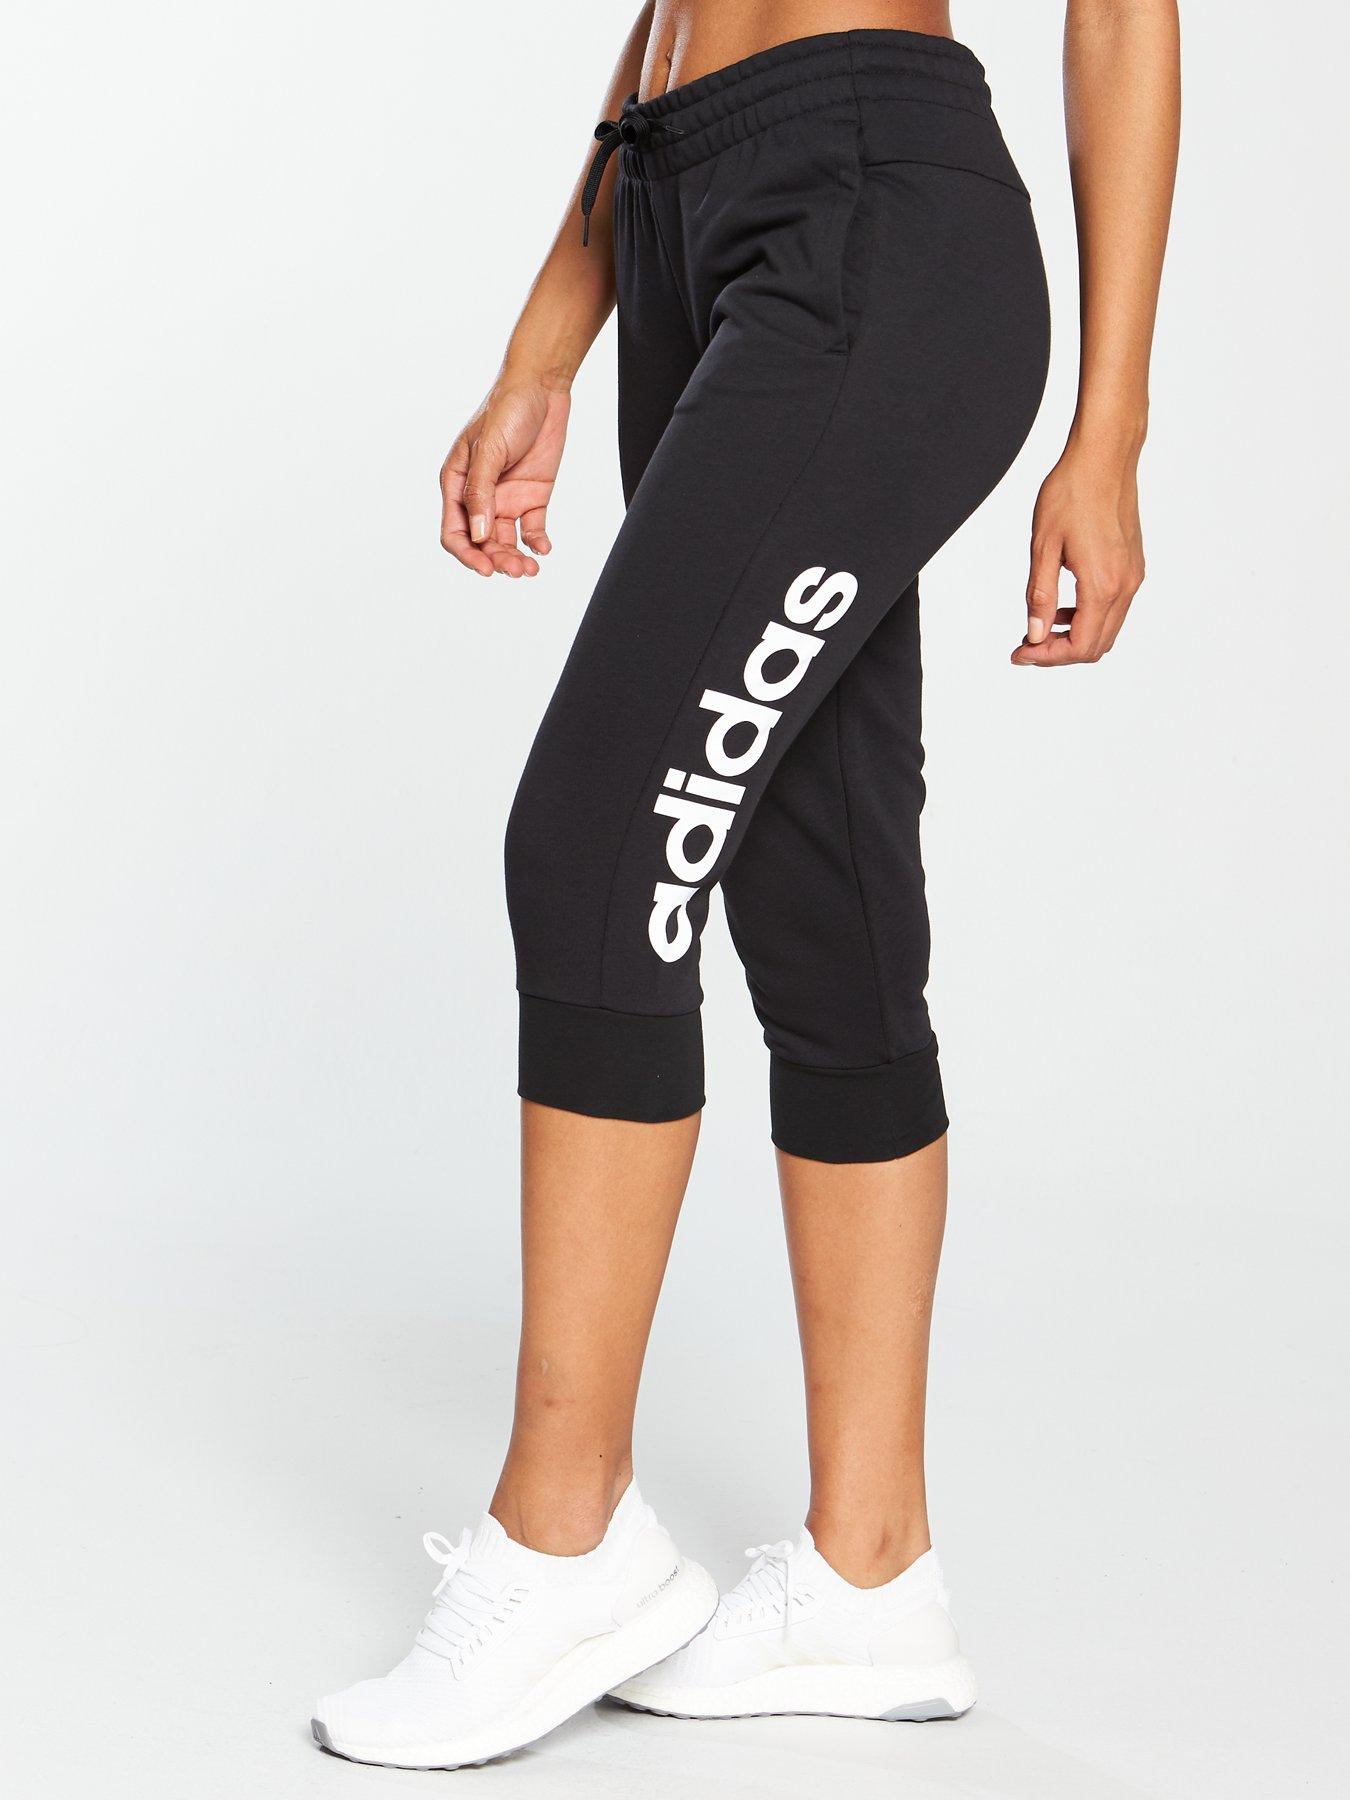 adidas ladies jogging bottoms